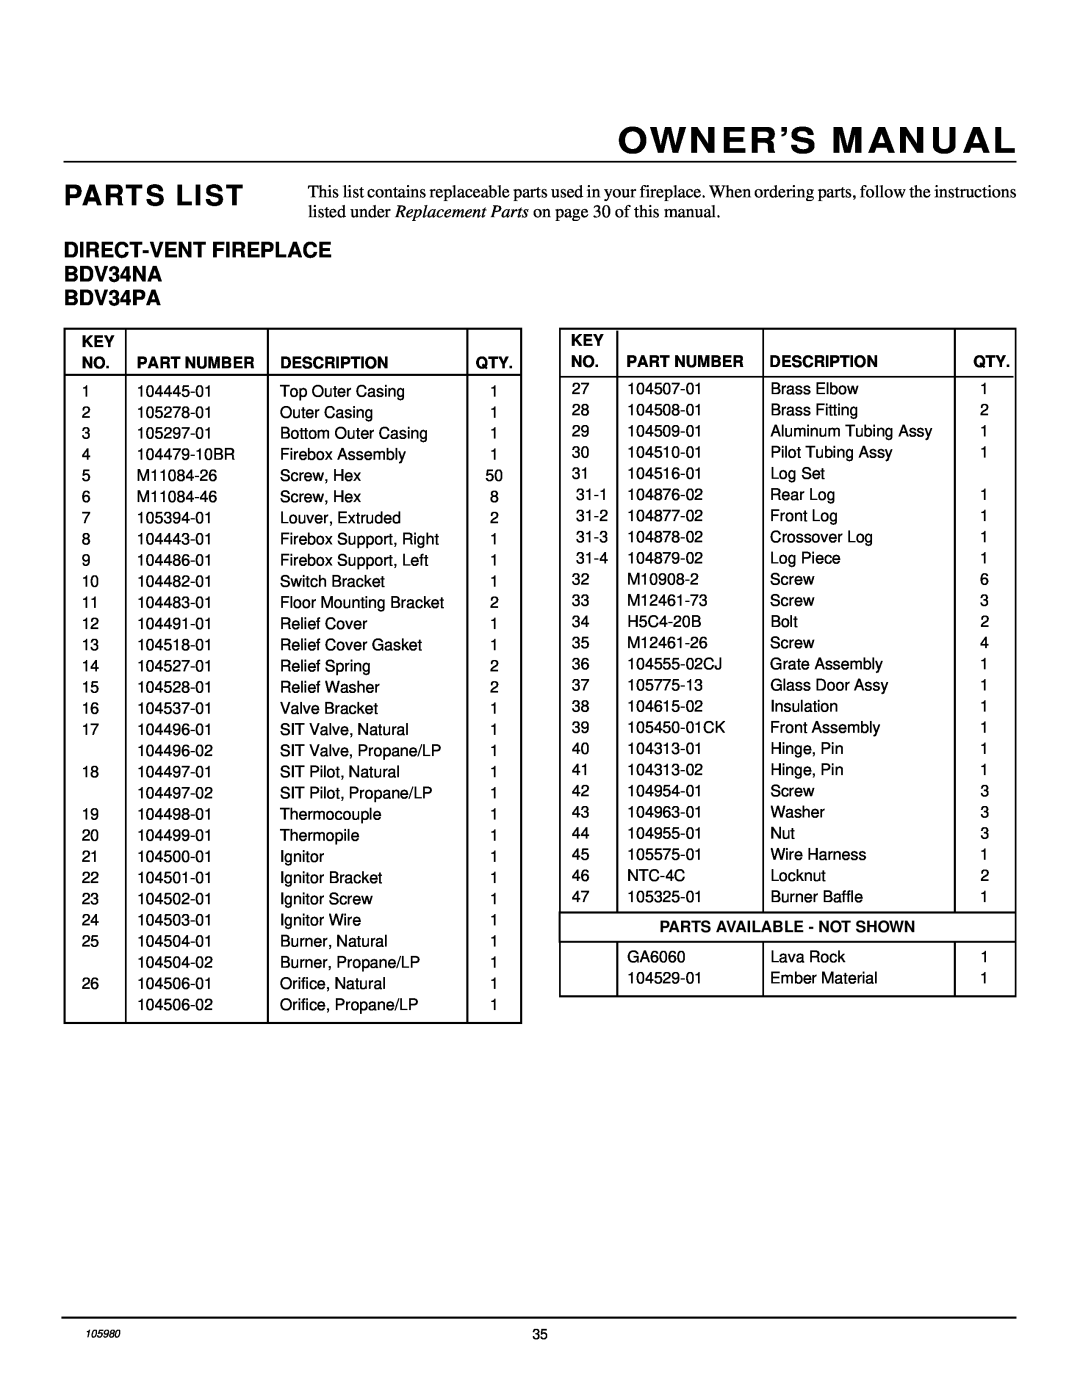 Desa installation manual Parts List, DIRECT-VENTFIREPLACE BDV34NA BDV34PA 